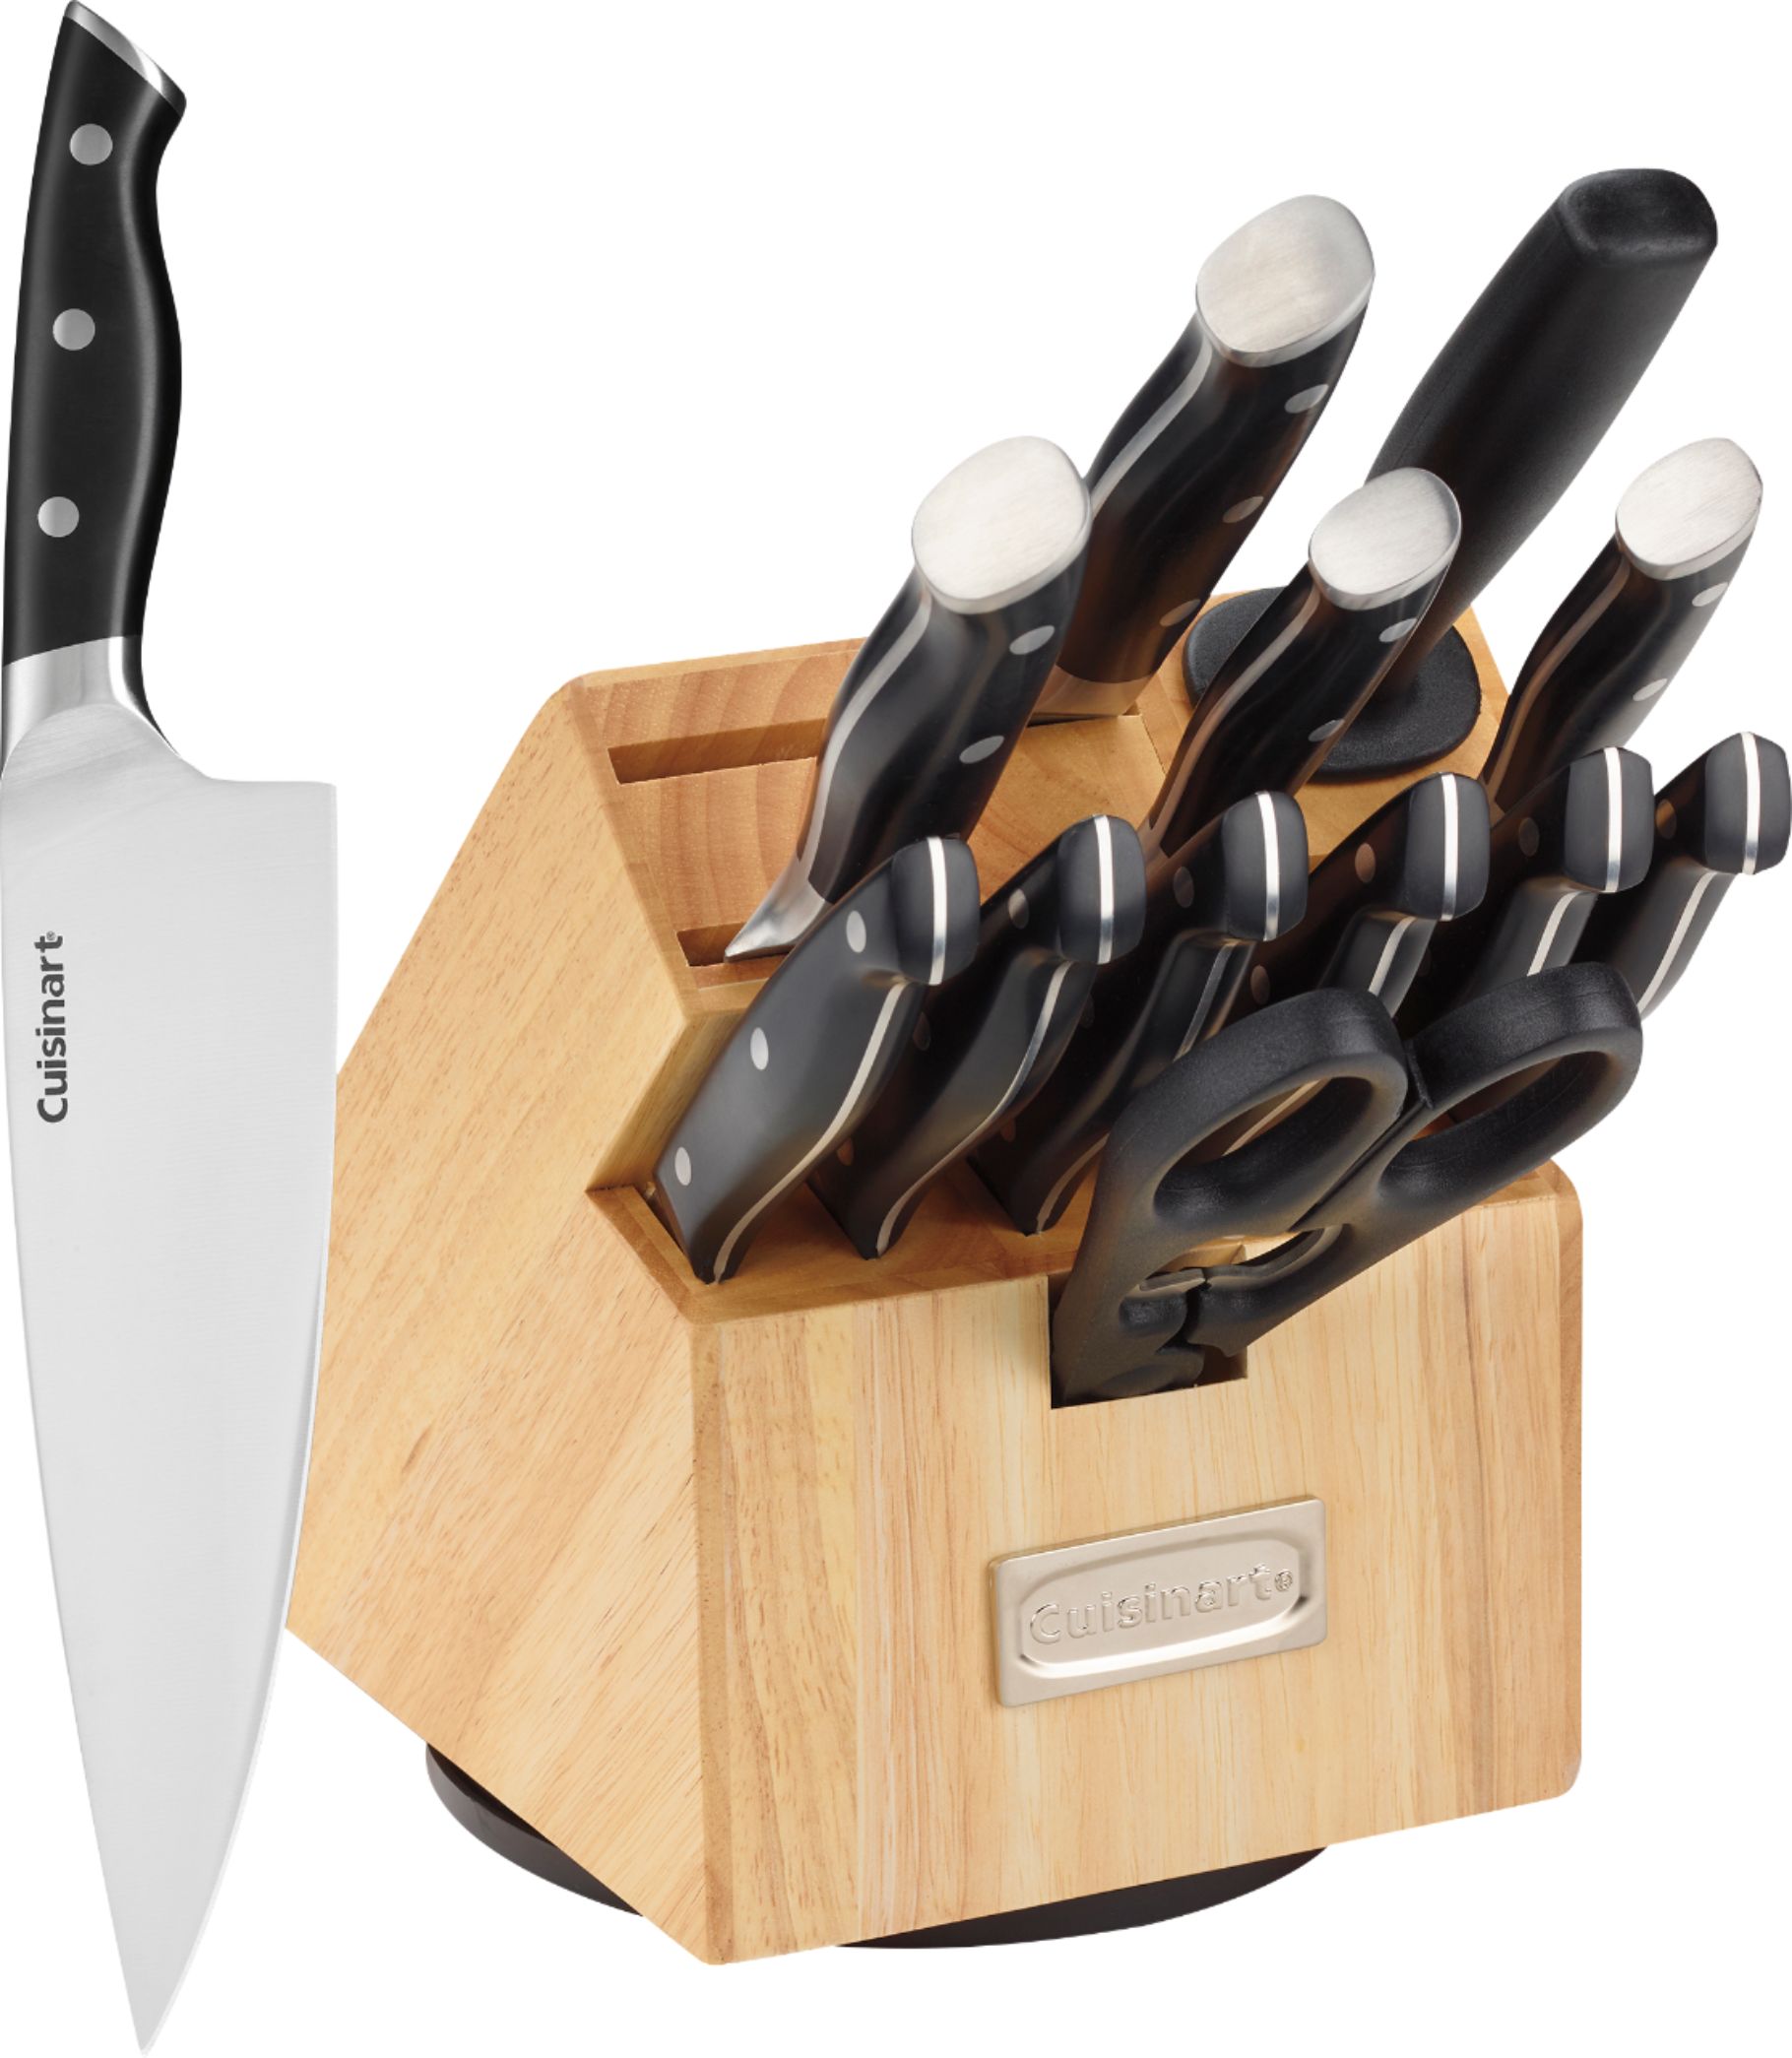 Cuisinart Classic 15-Piece Knife Set Stainless Steel C77TRR-15P - Best Buy Cuisinart Classic Stainless Steel Knife Set